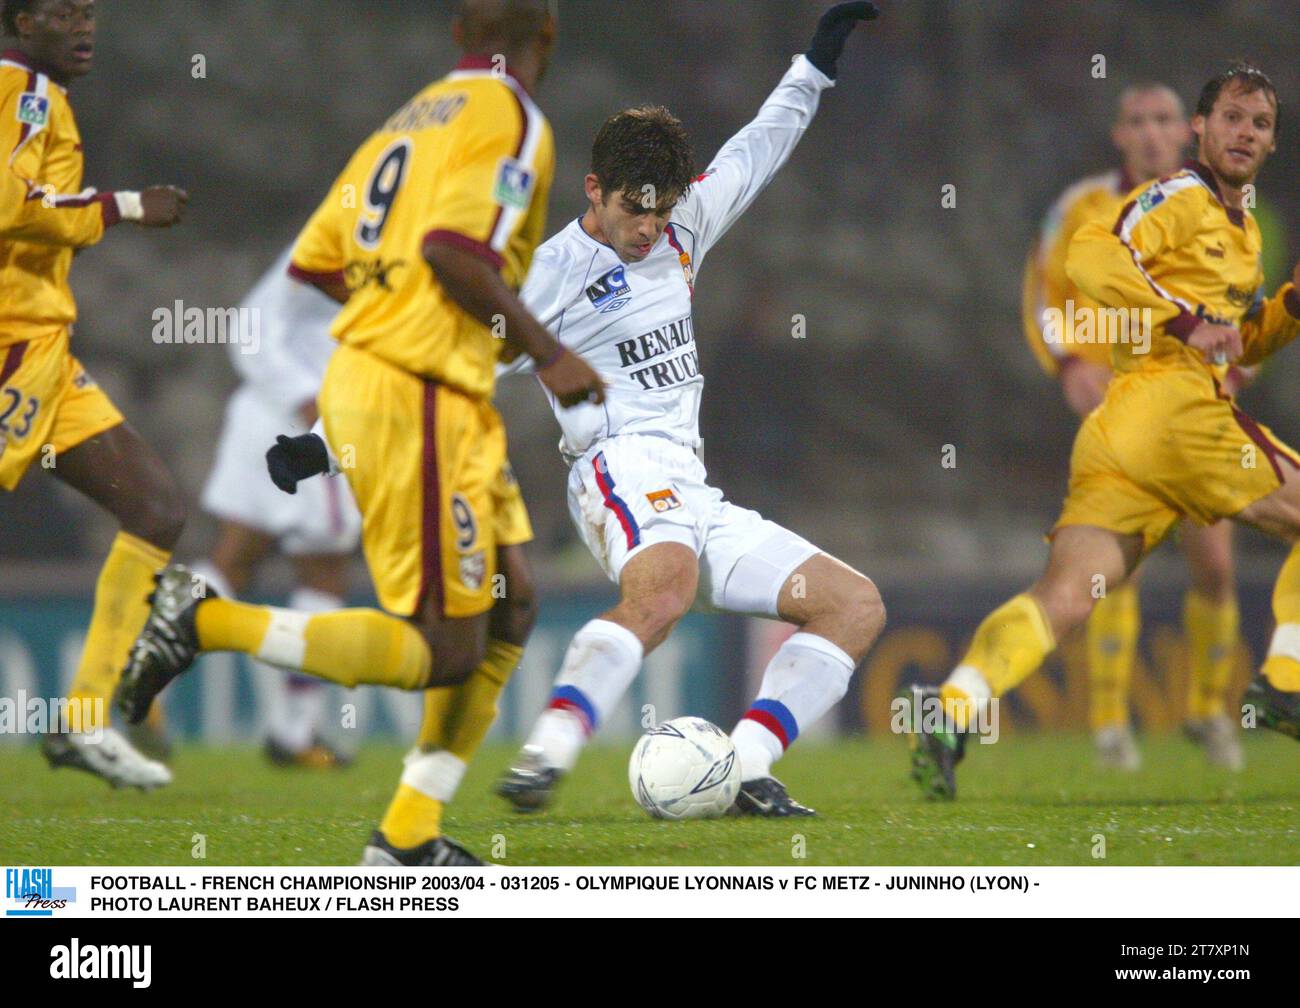 FOOTBALL - FRENCH CHAMPIONSHIP 2003/04 - 031205 - OLYMPIQUE LYONNAIS v FC METZ - JUNINHO (LYON) - PHOTO LAURENT BAHEUX / FLASH PRESS Stock Photo